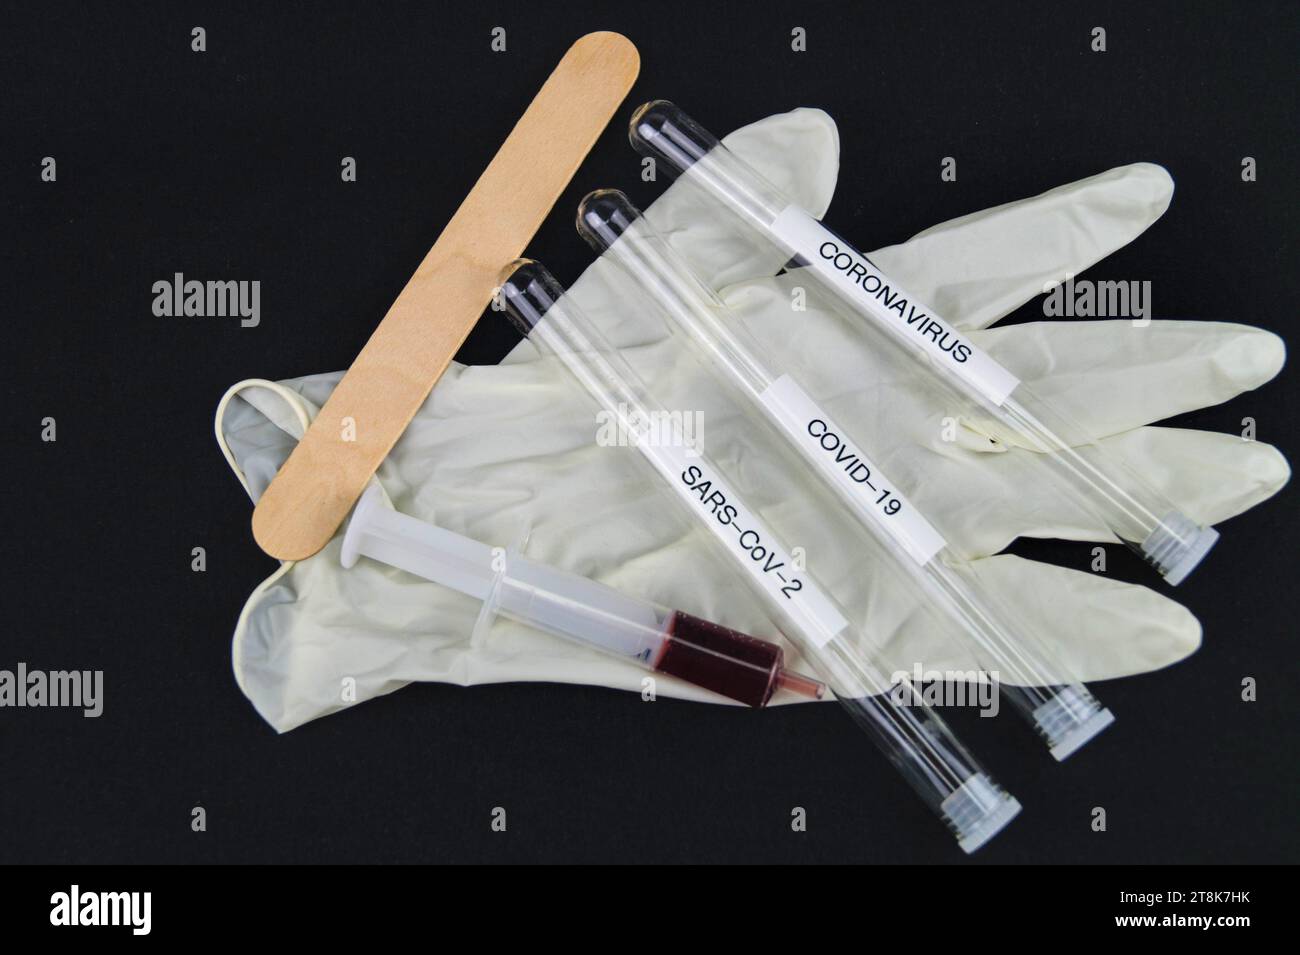 wooden spatula, latex glove, syringe and testing tubule for Corona Stock Photo